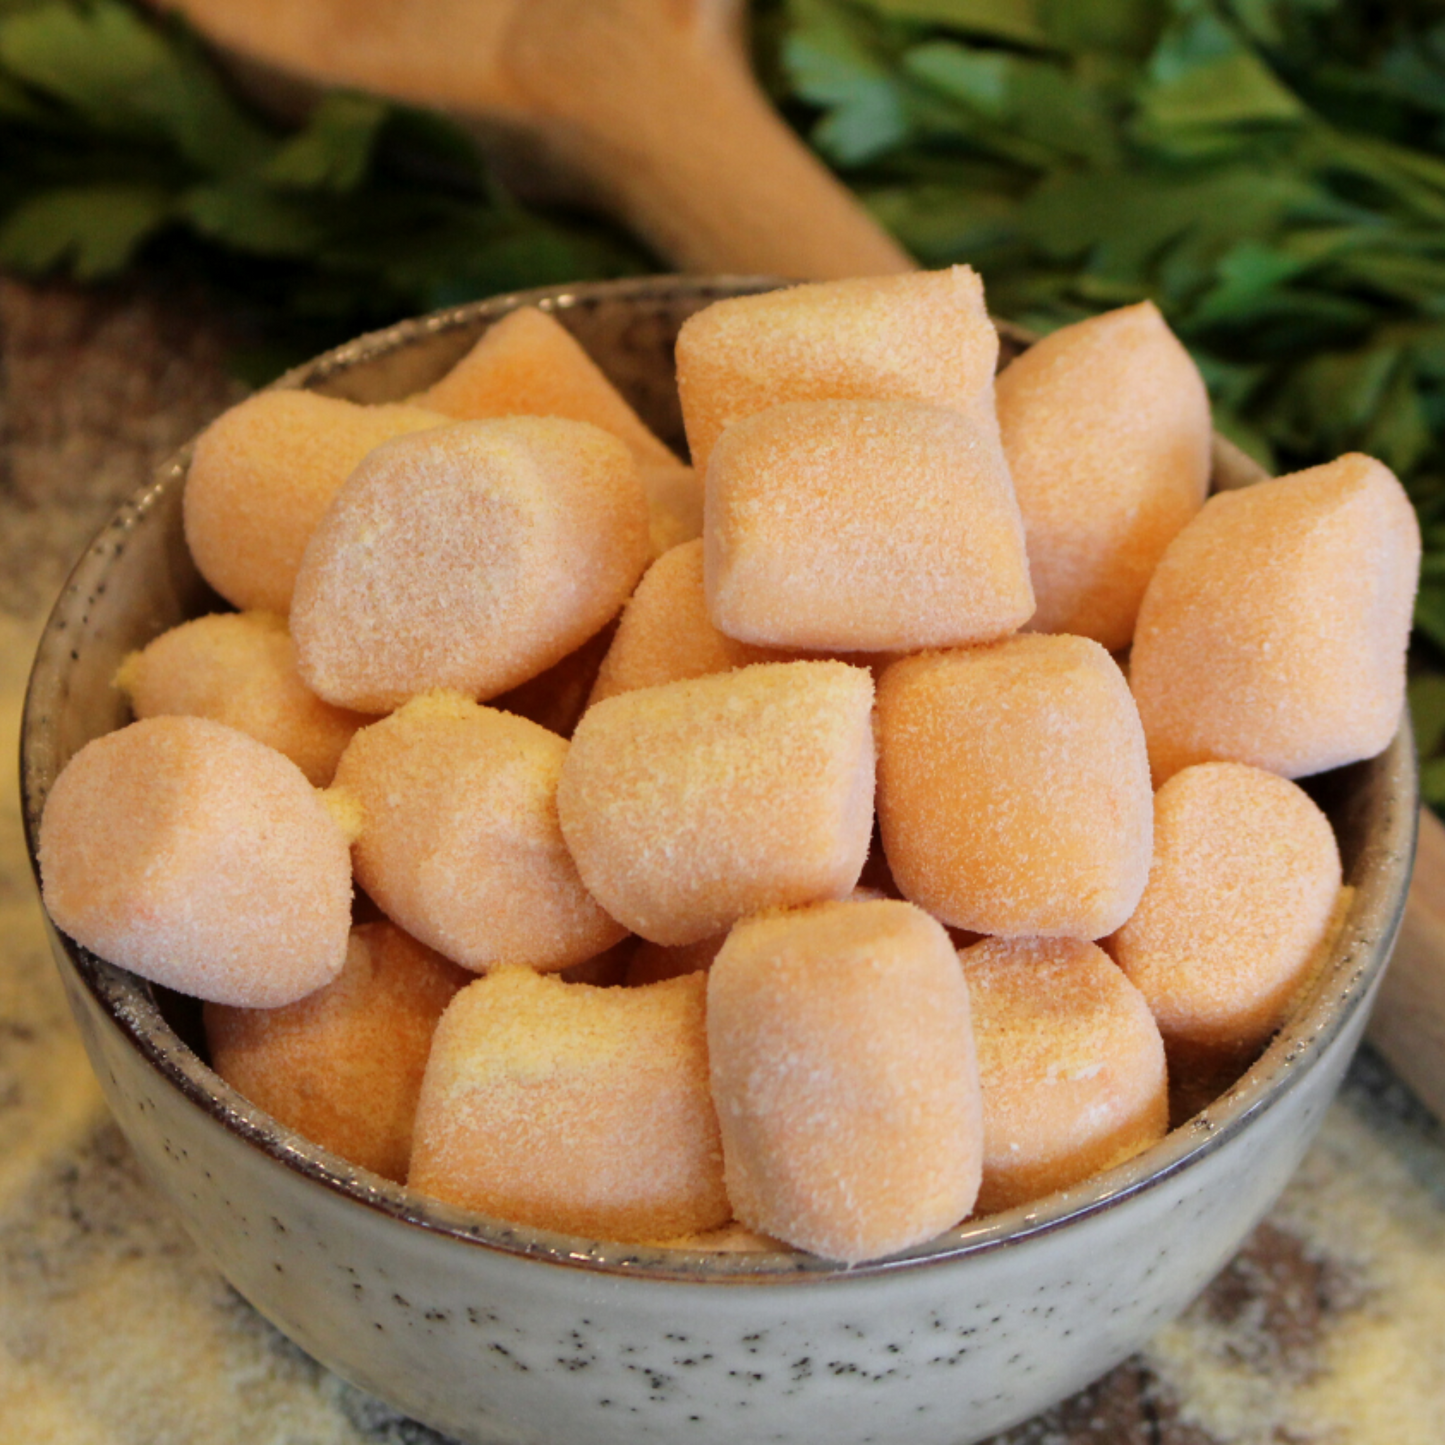 Gnocchi - Country/Sweet Potato - 1kg bags